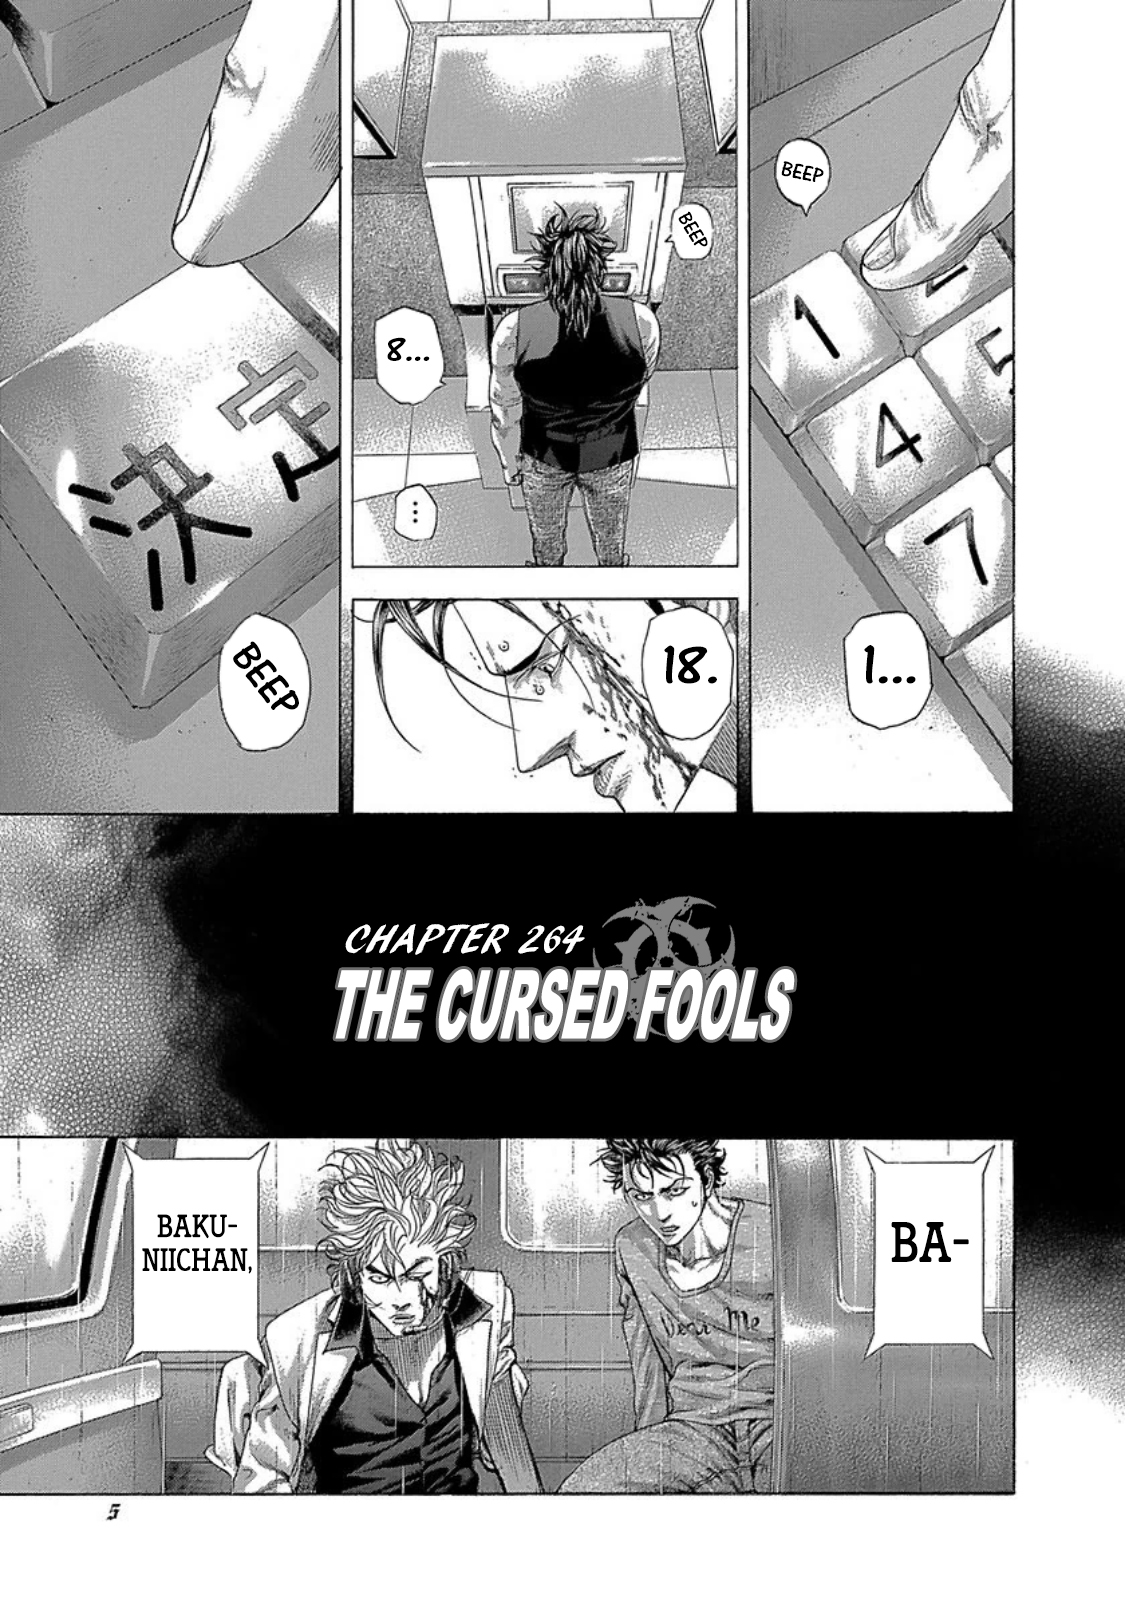 Usogui Vol. 25 Ch. 264 The Cursed Fools